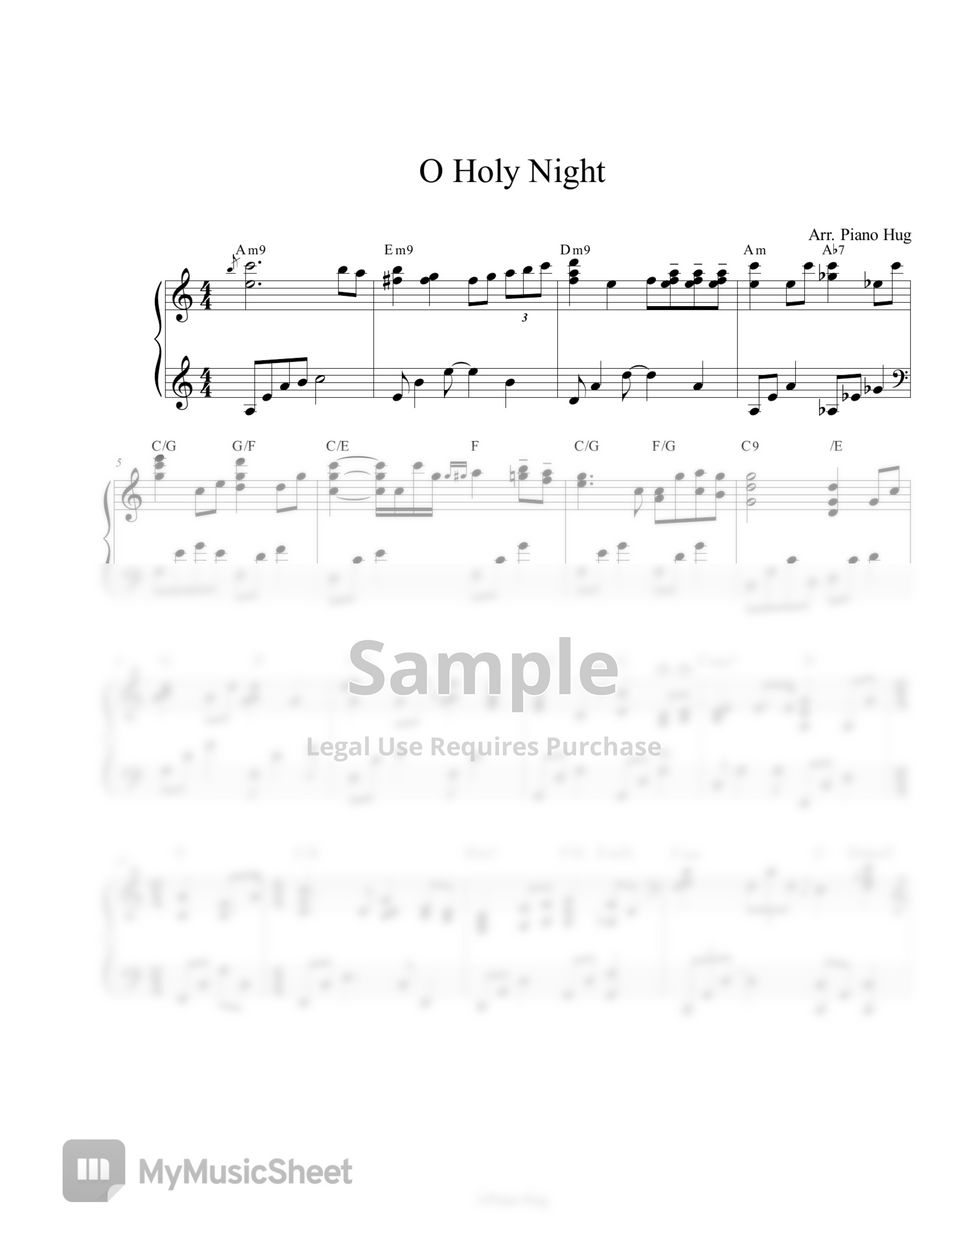 Christmas Carol - O Holy Night (오 거룩한 밤) by Piano Hug